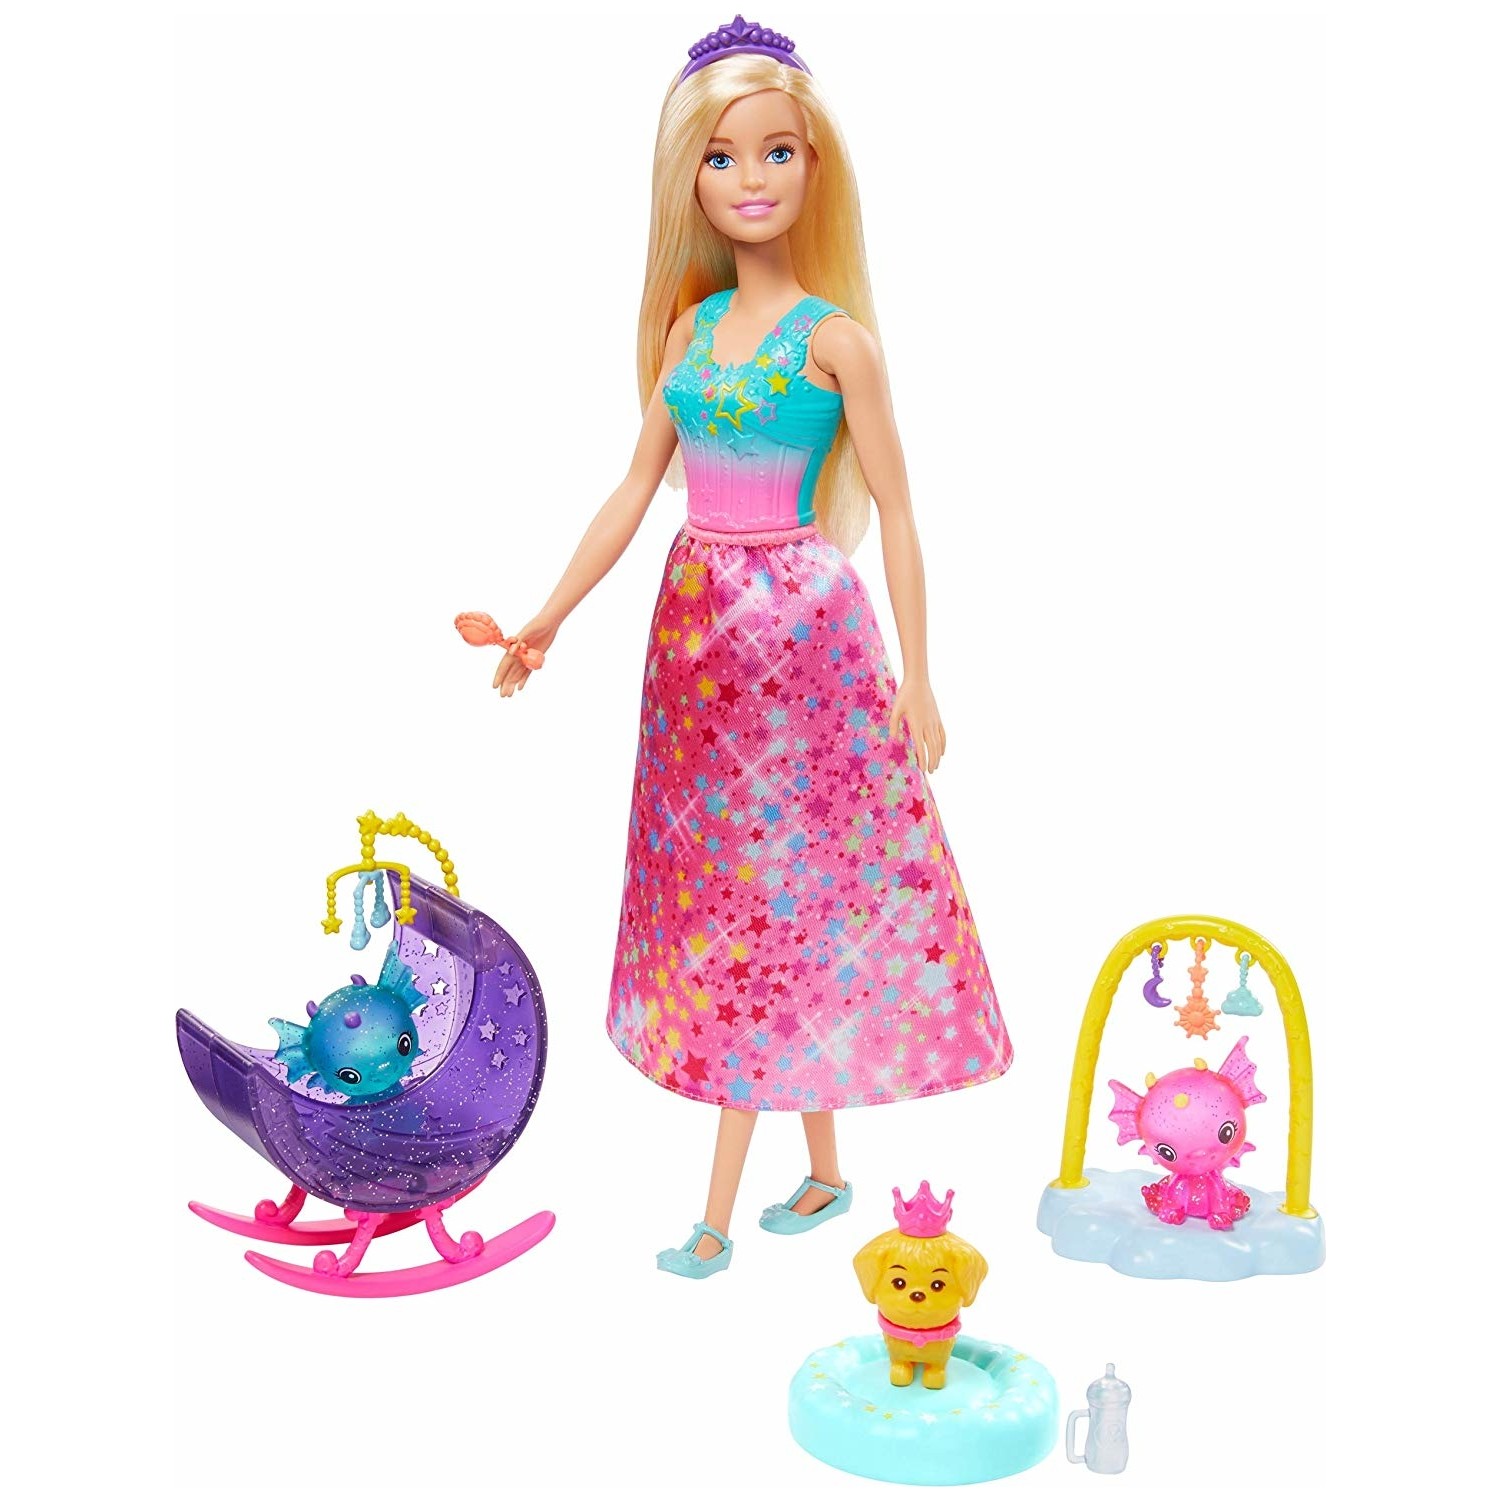 Кукла Barbie Dreamtopia Princess Doll and Accessories GJK51 кукла barbie dreamtopia chelsea and the fun world gtf48